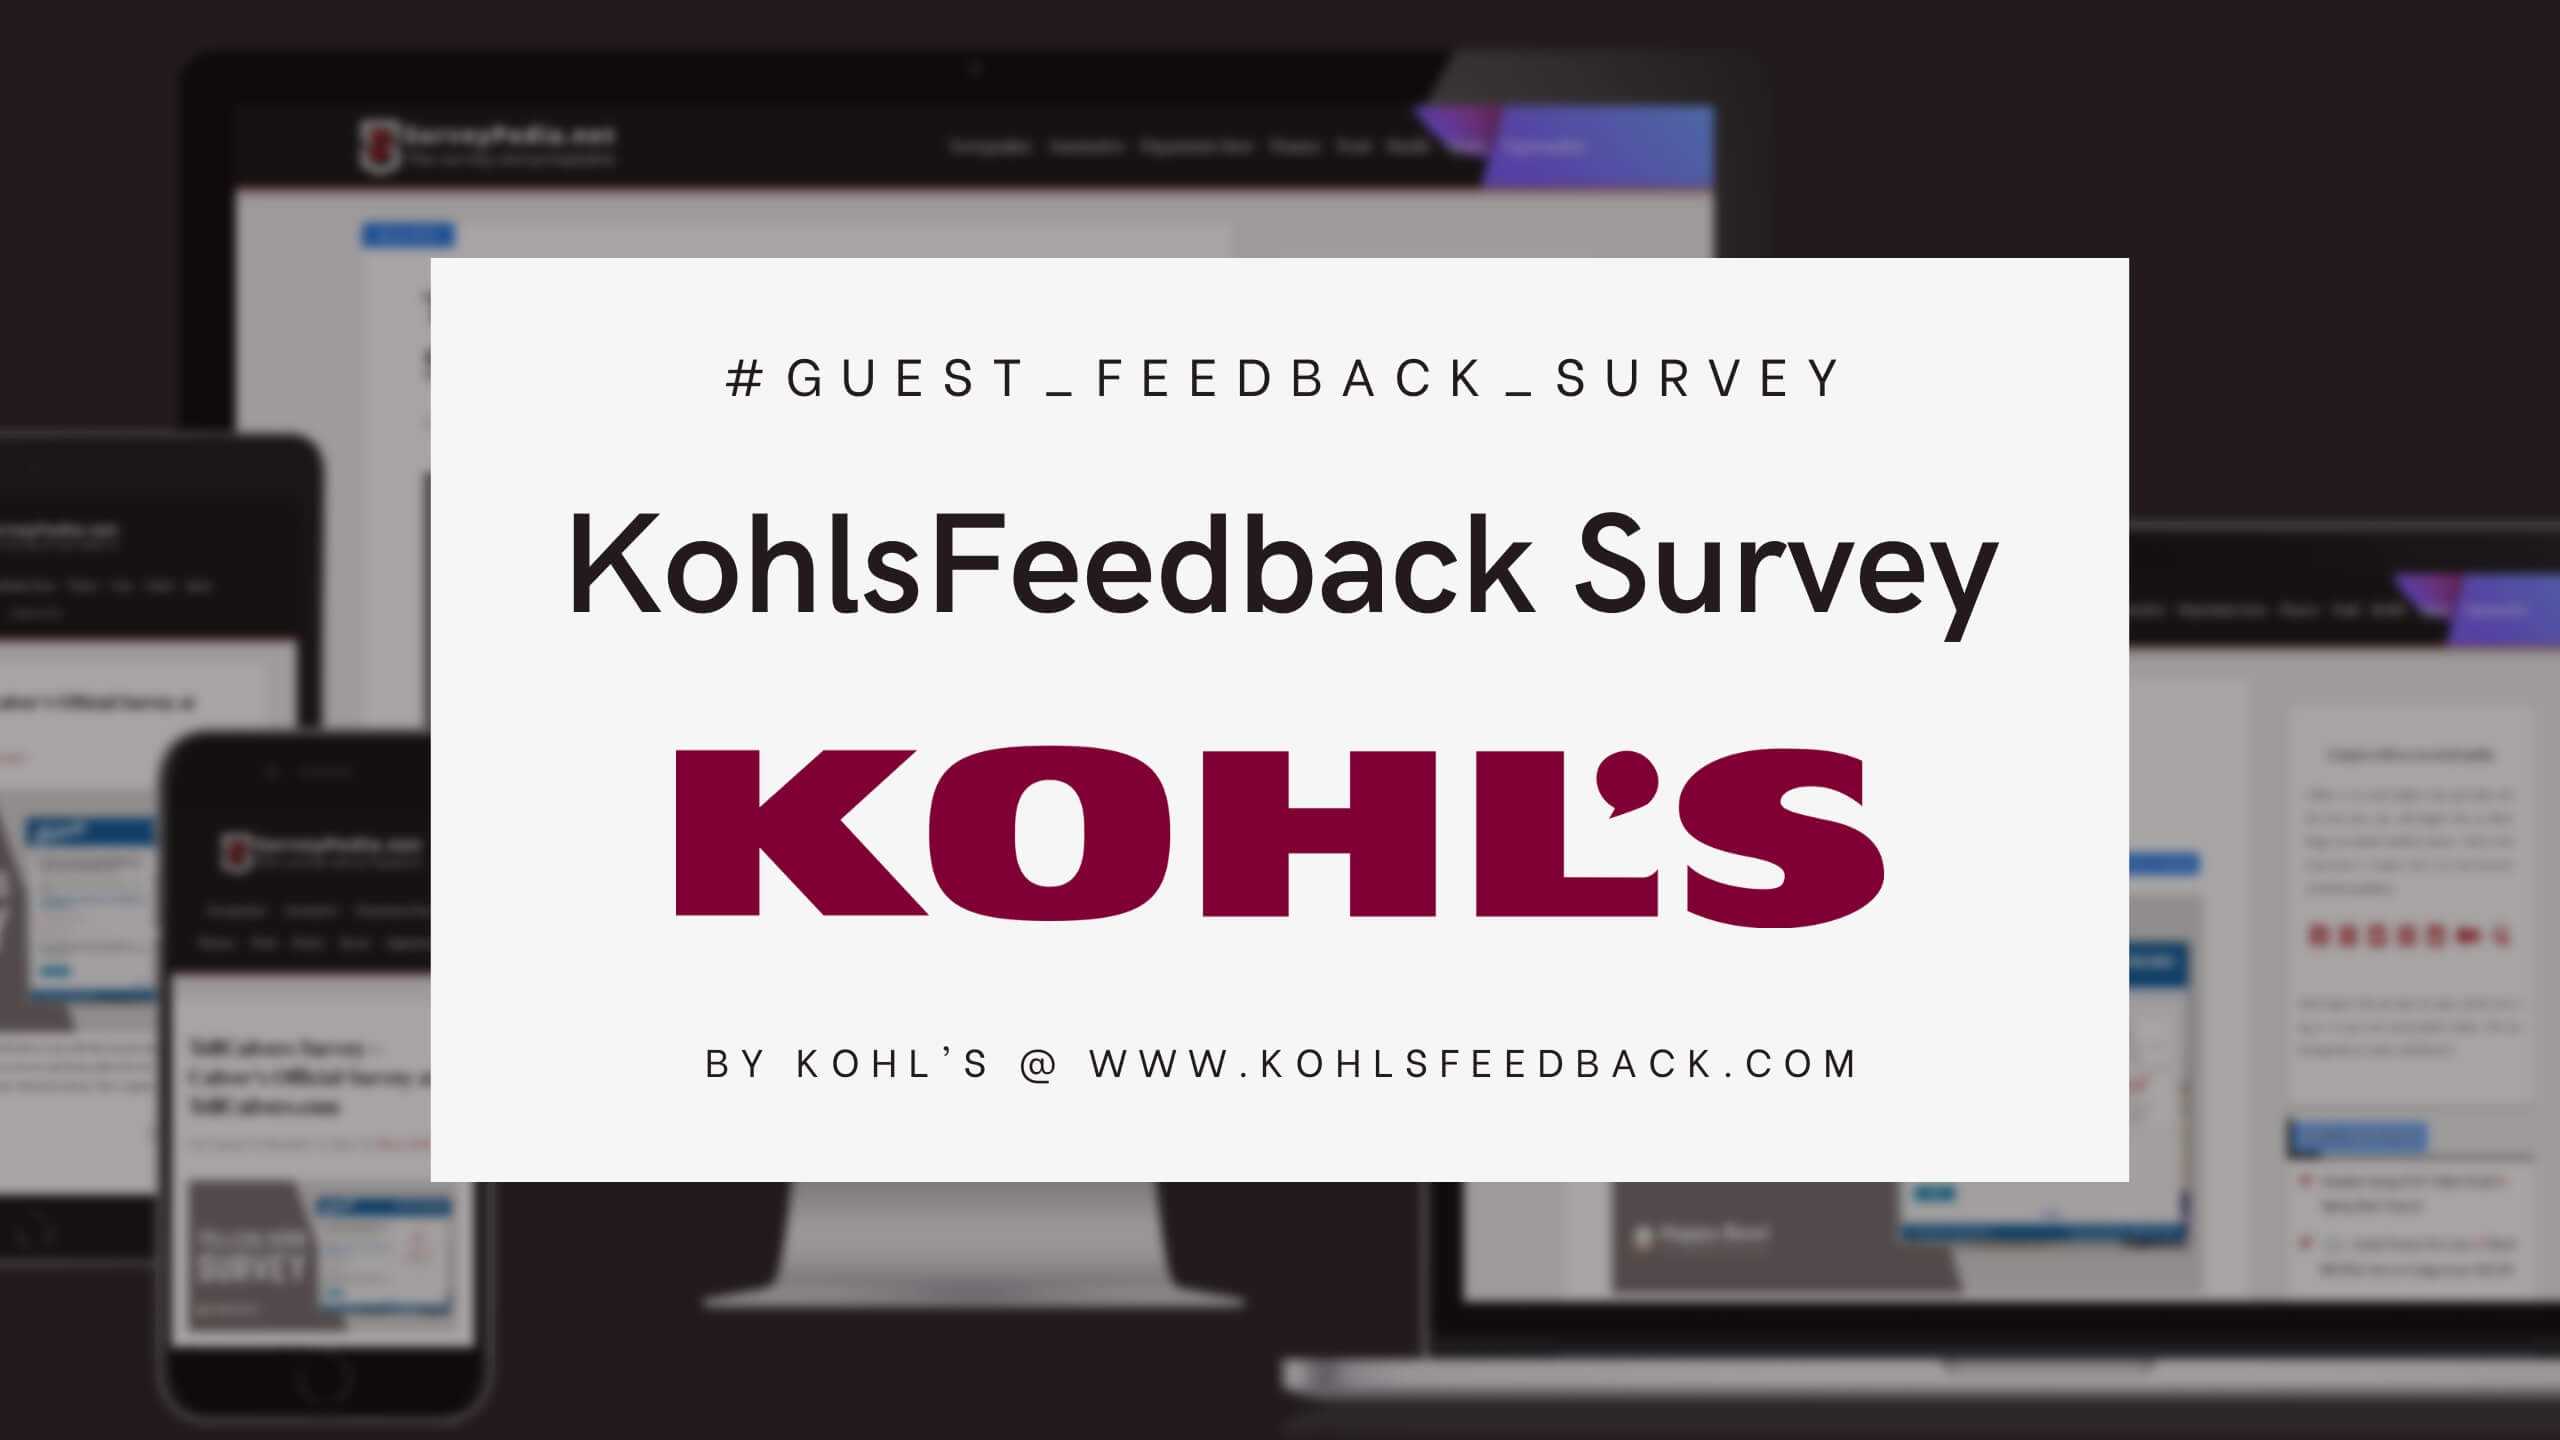 KohlsFeedback Survey: Kohl's Official Customer Satisfaction Survey at KohlsFeedback.com